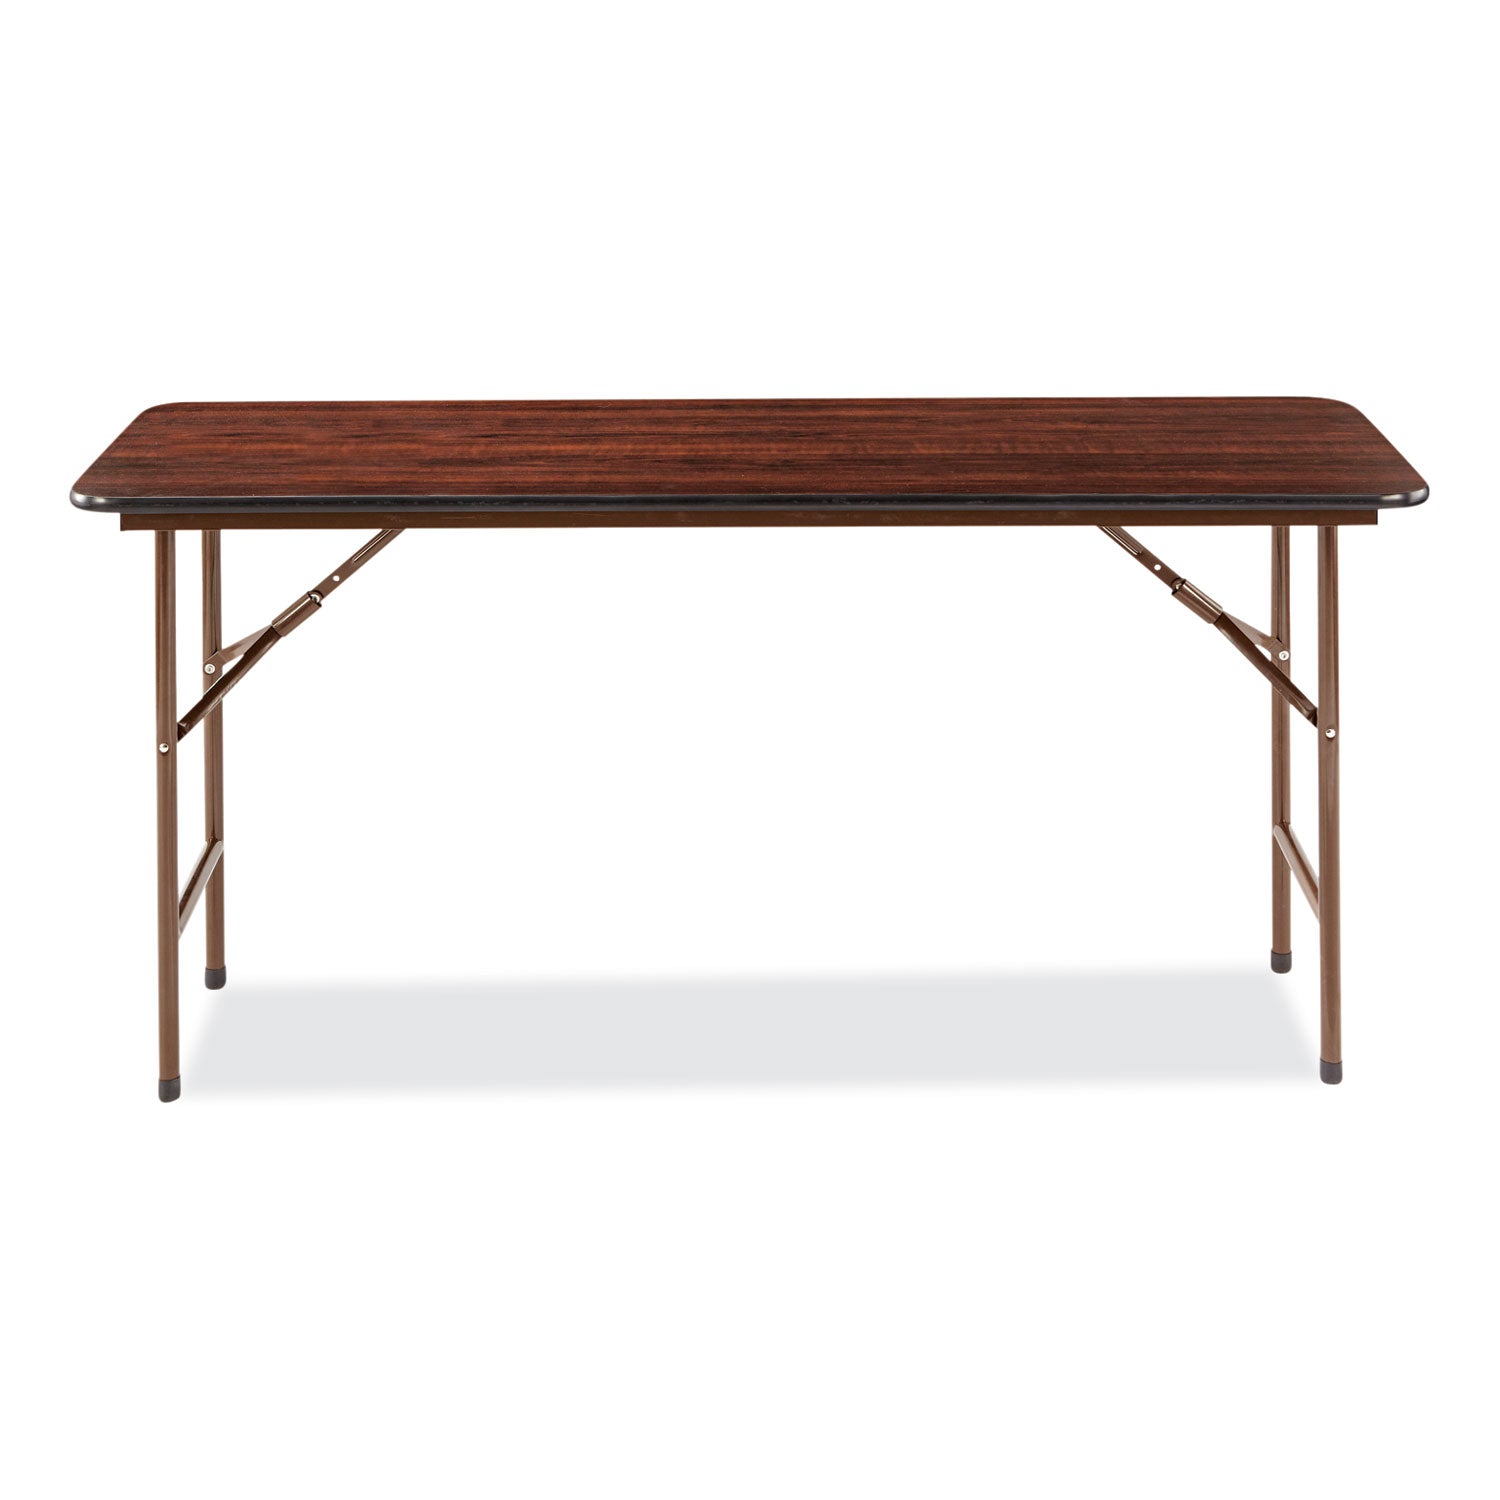 wood-folding-table-rectangular-5988w-x-1775d-x-2913h-mahogany_aleft726018my - 5